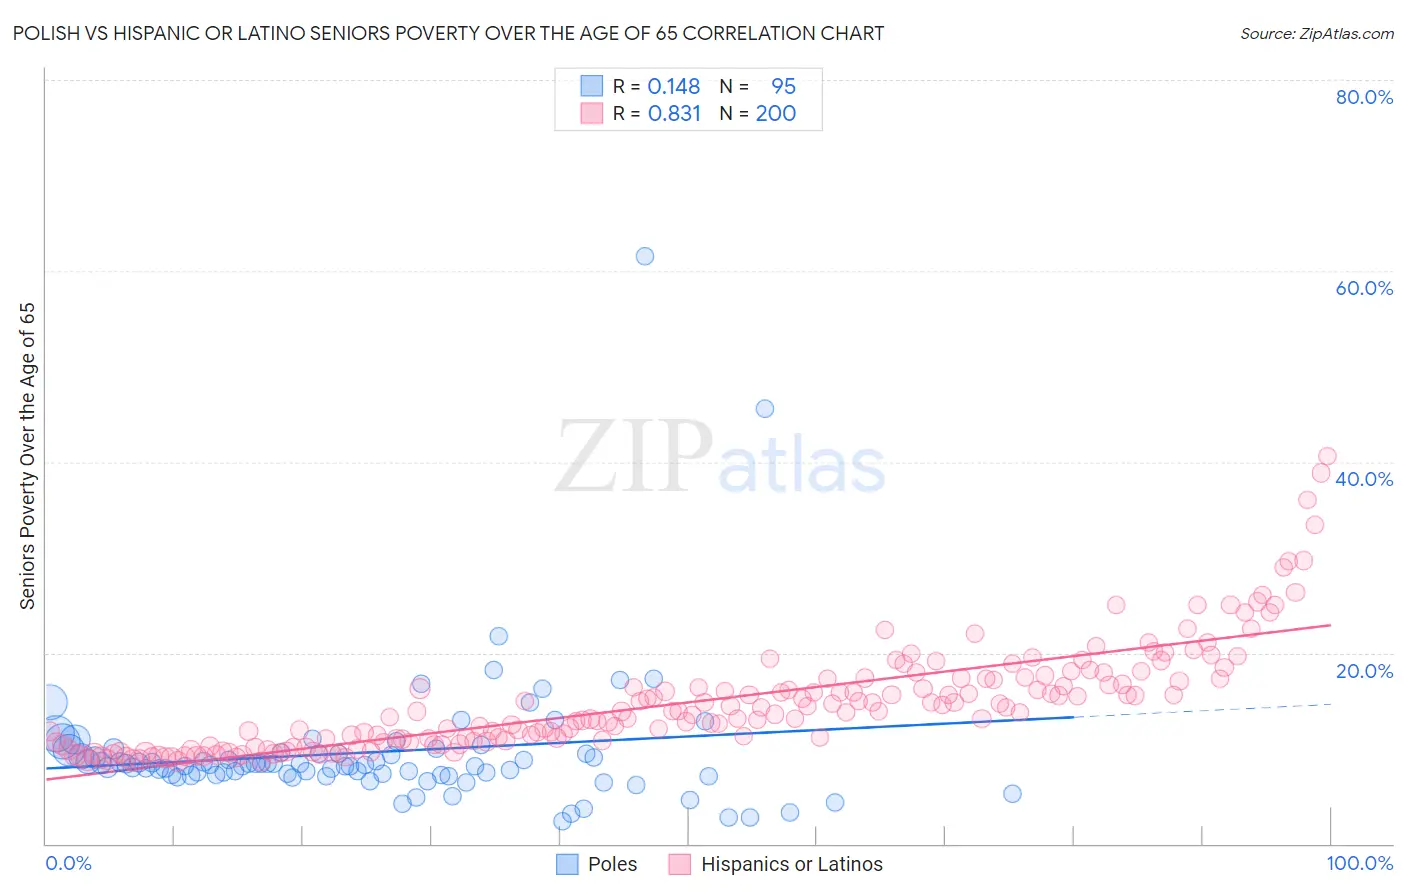 Polish vs Hispanic or Latino Seniors Poverty Over the Age of 65